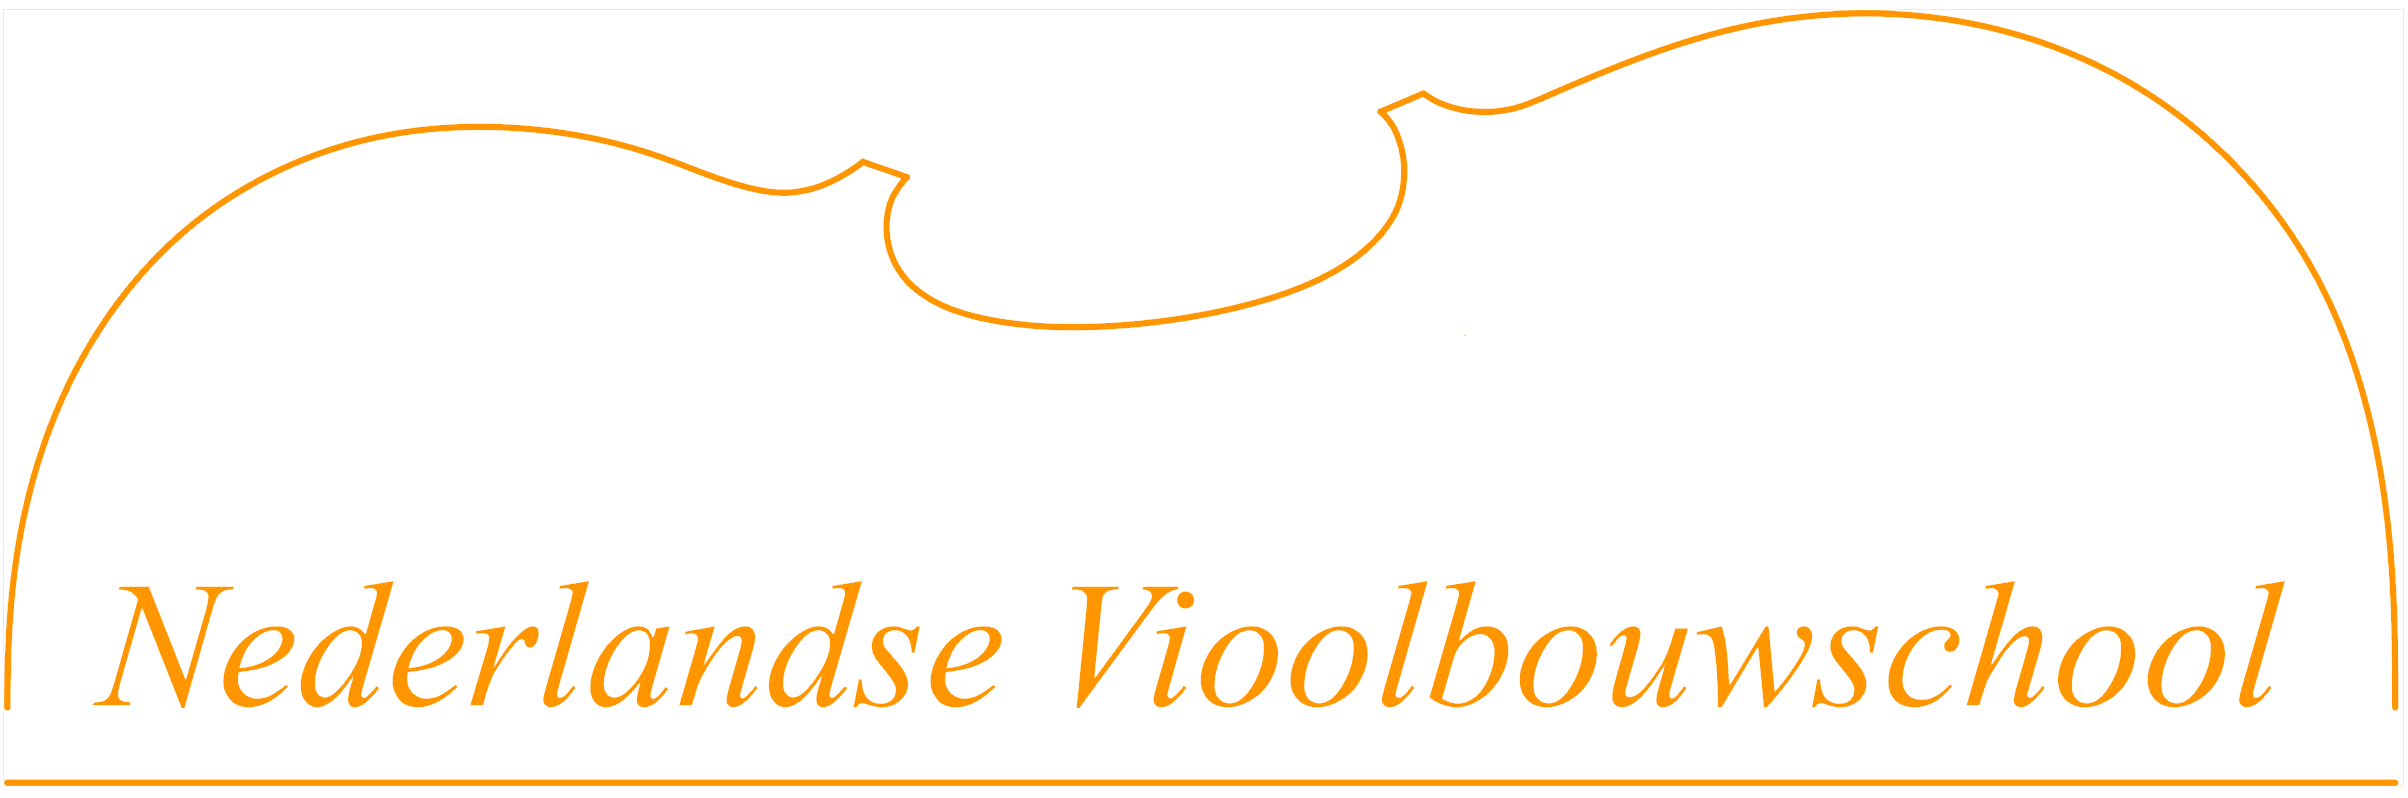 Nederlandse Vioolbouwschool